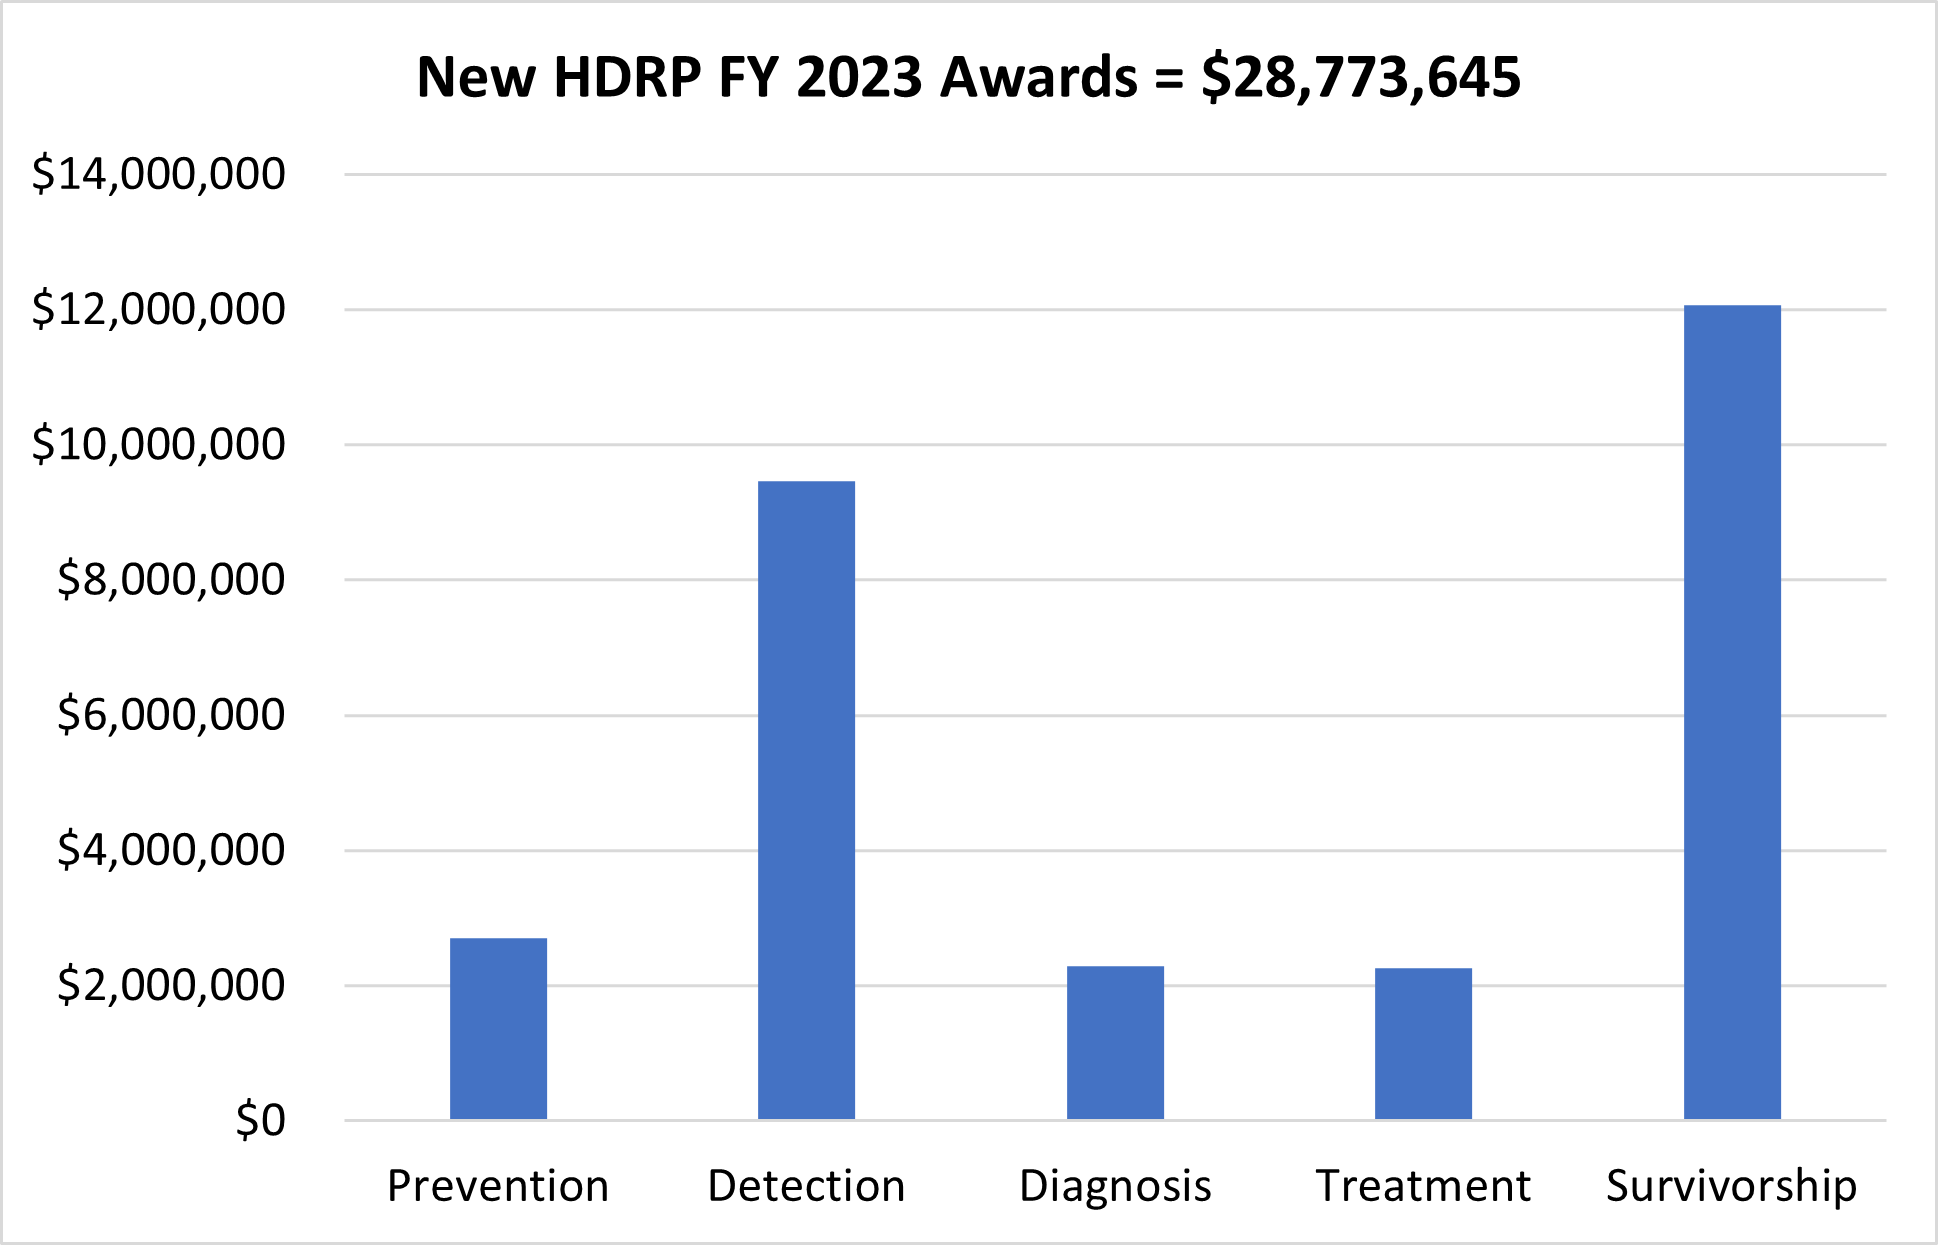 New HDRP 2023 awards: Prevention - $2,702,213, Detection - $9,456,771, Diagnosis - $2,290,787, Treatment - $2,260,967, Survivorship - $12,062,907. $28,773,645 total.